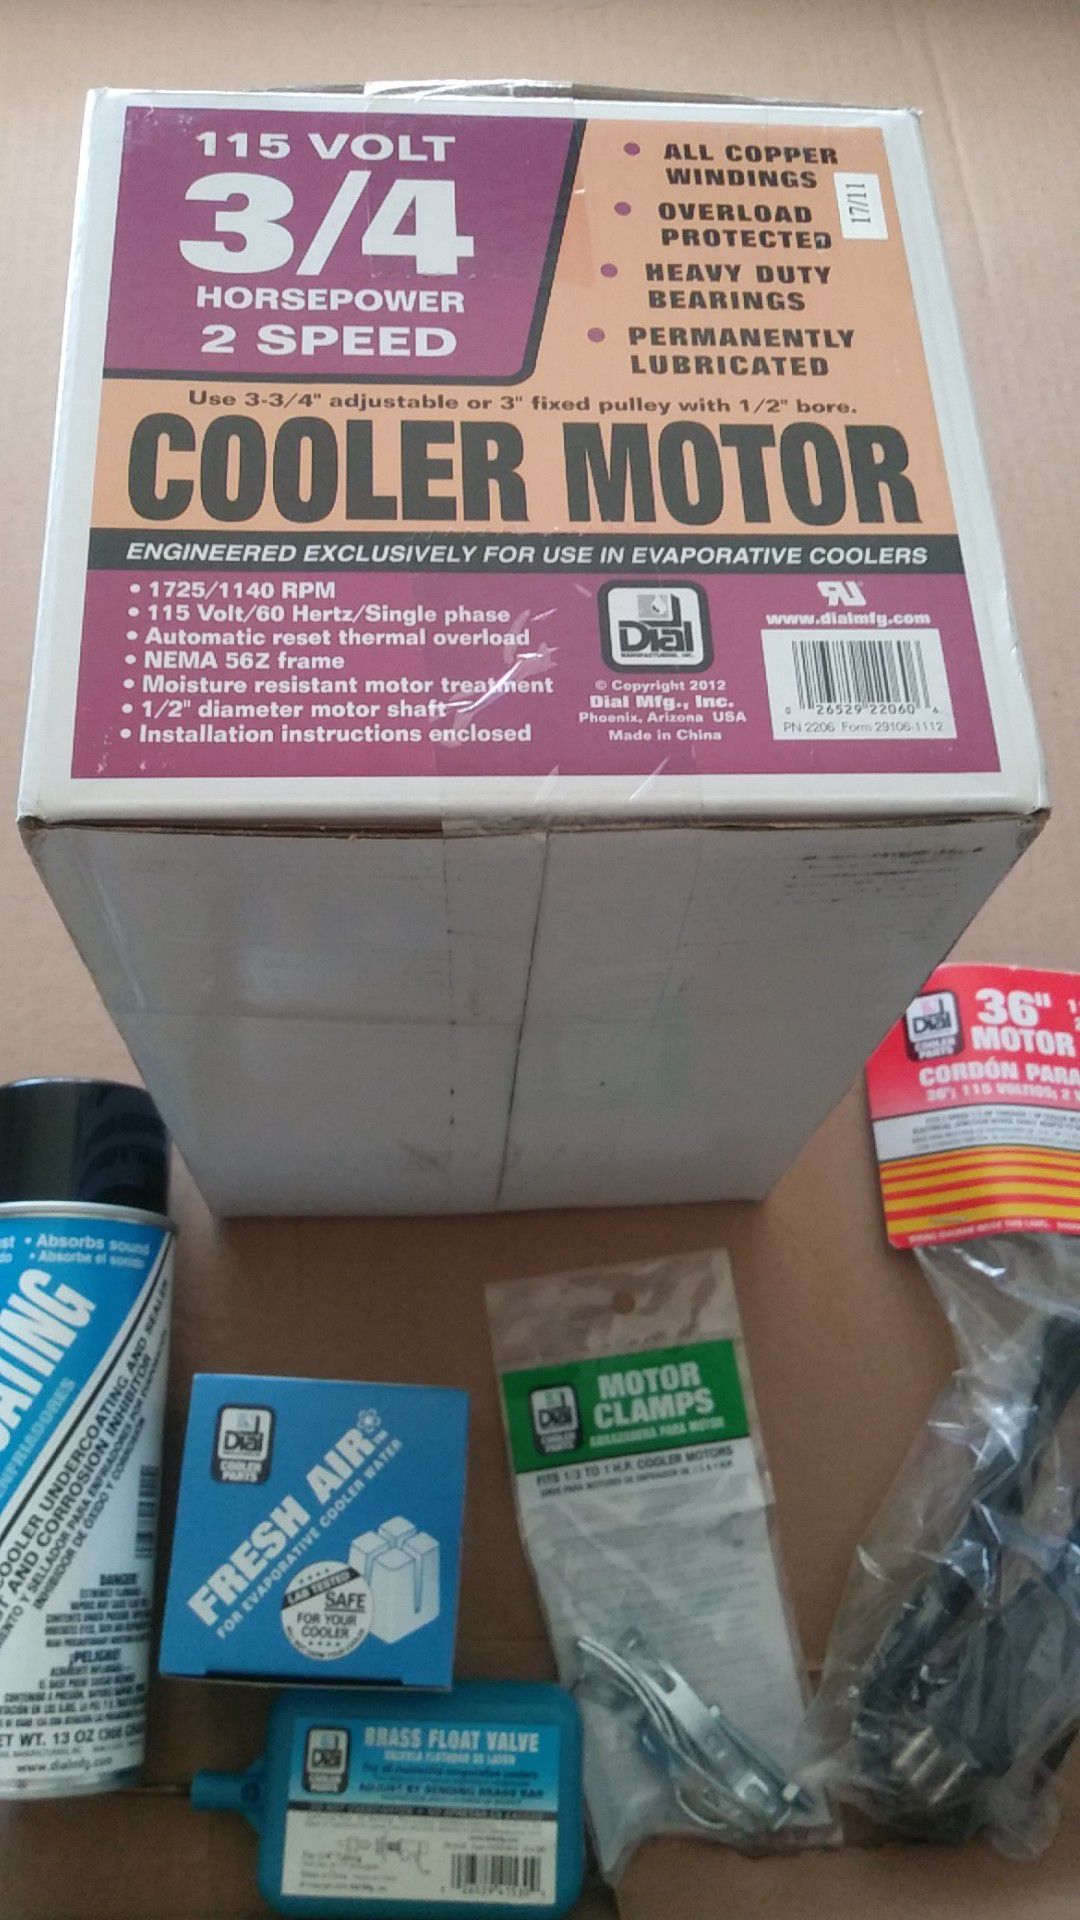 Cooler motor combo